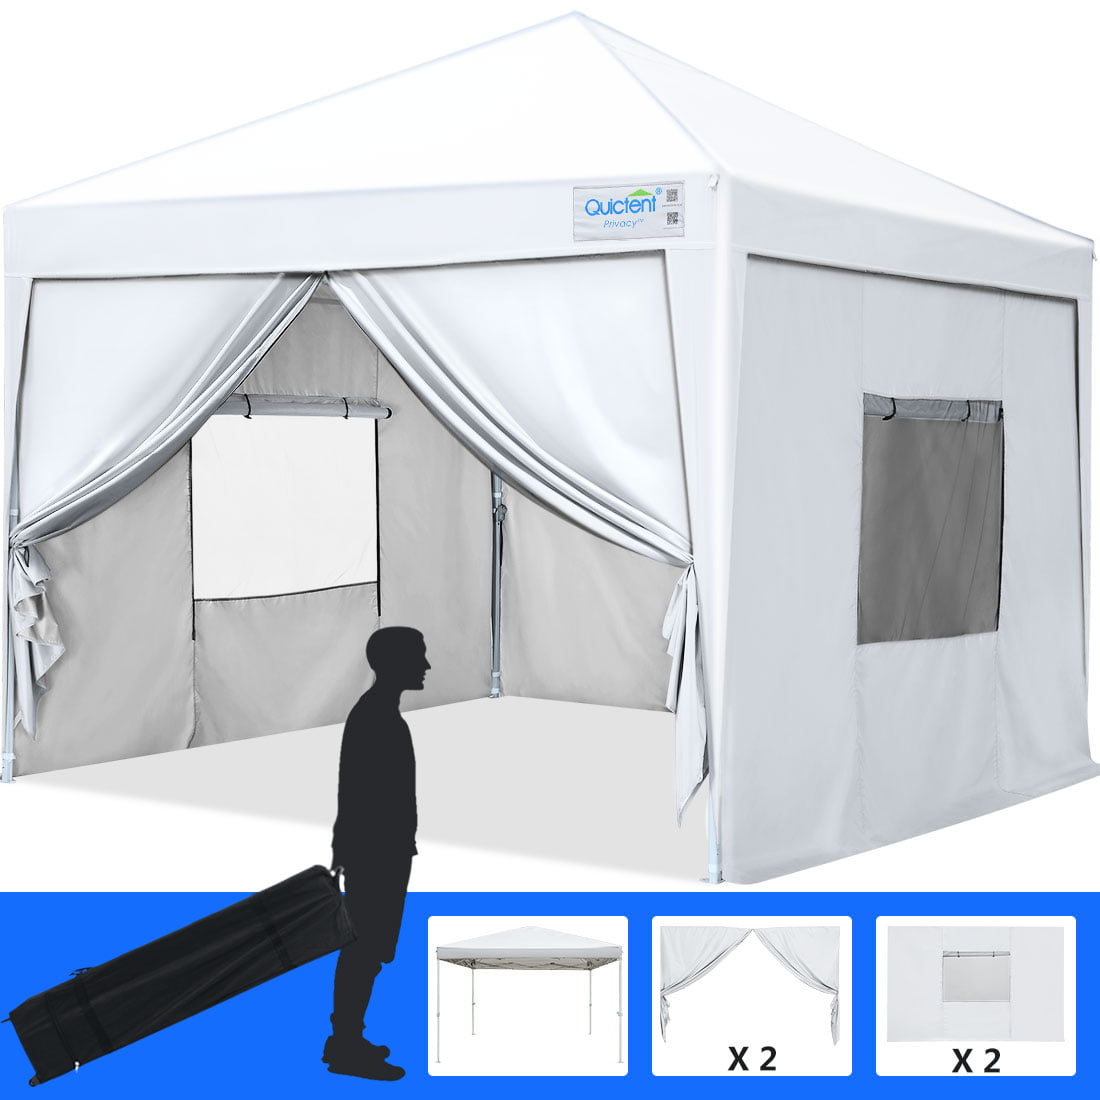 Details about   10x10 Outdoor Gazebo Waterproof Shade Tent EZ Pop Up Canopy w/4 Zip Side Walls 